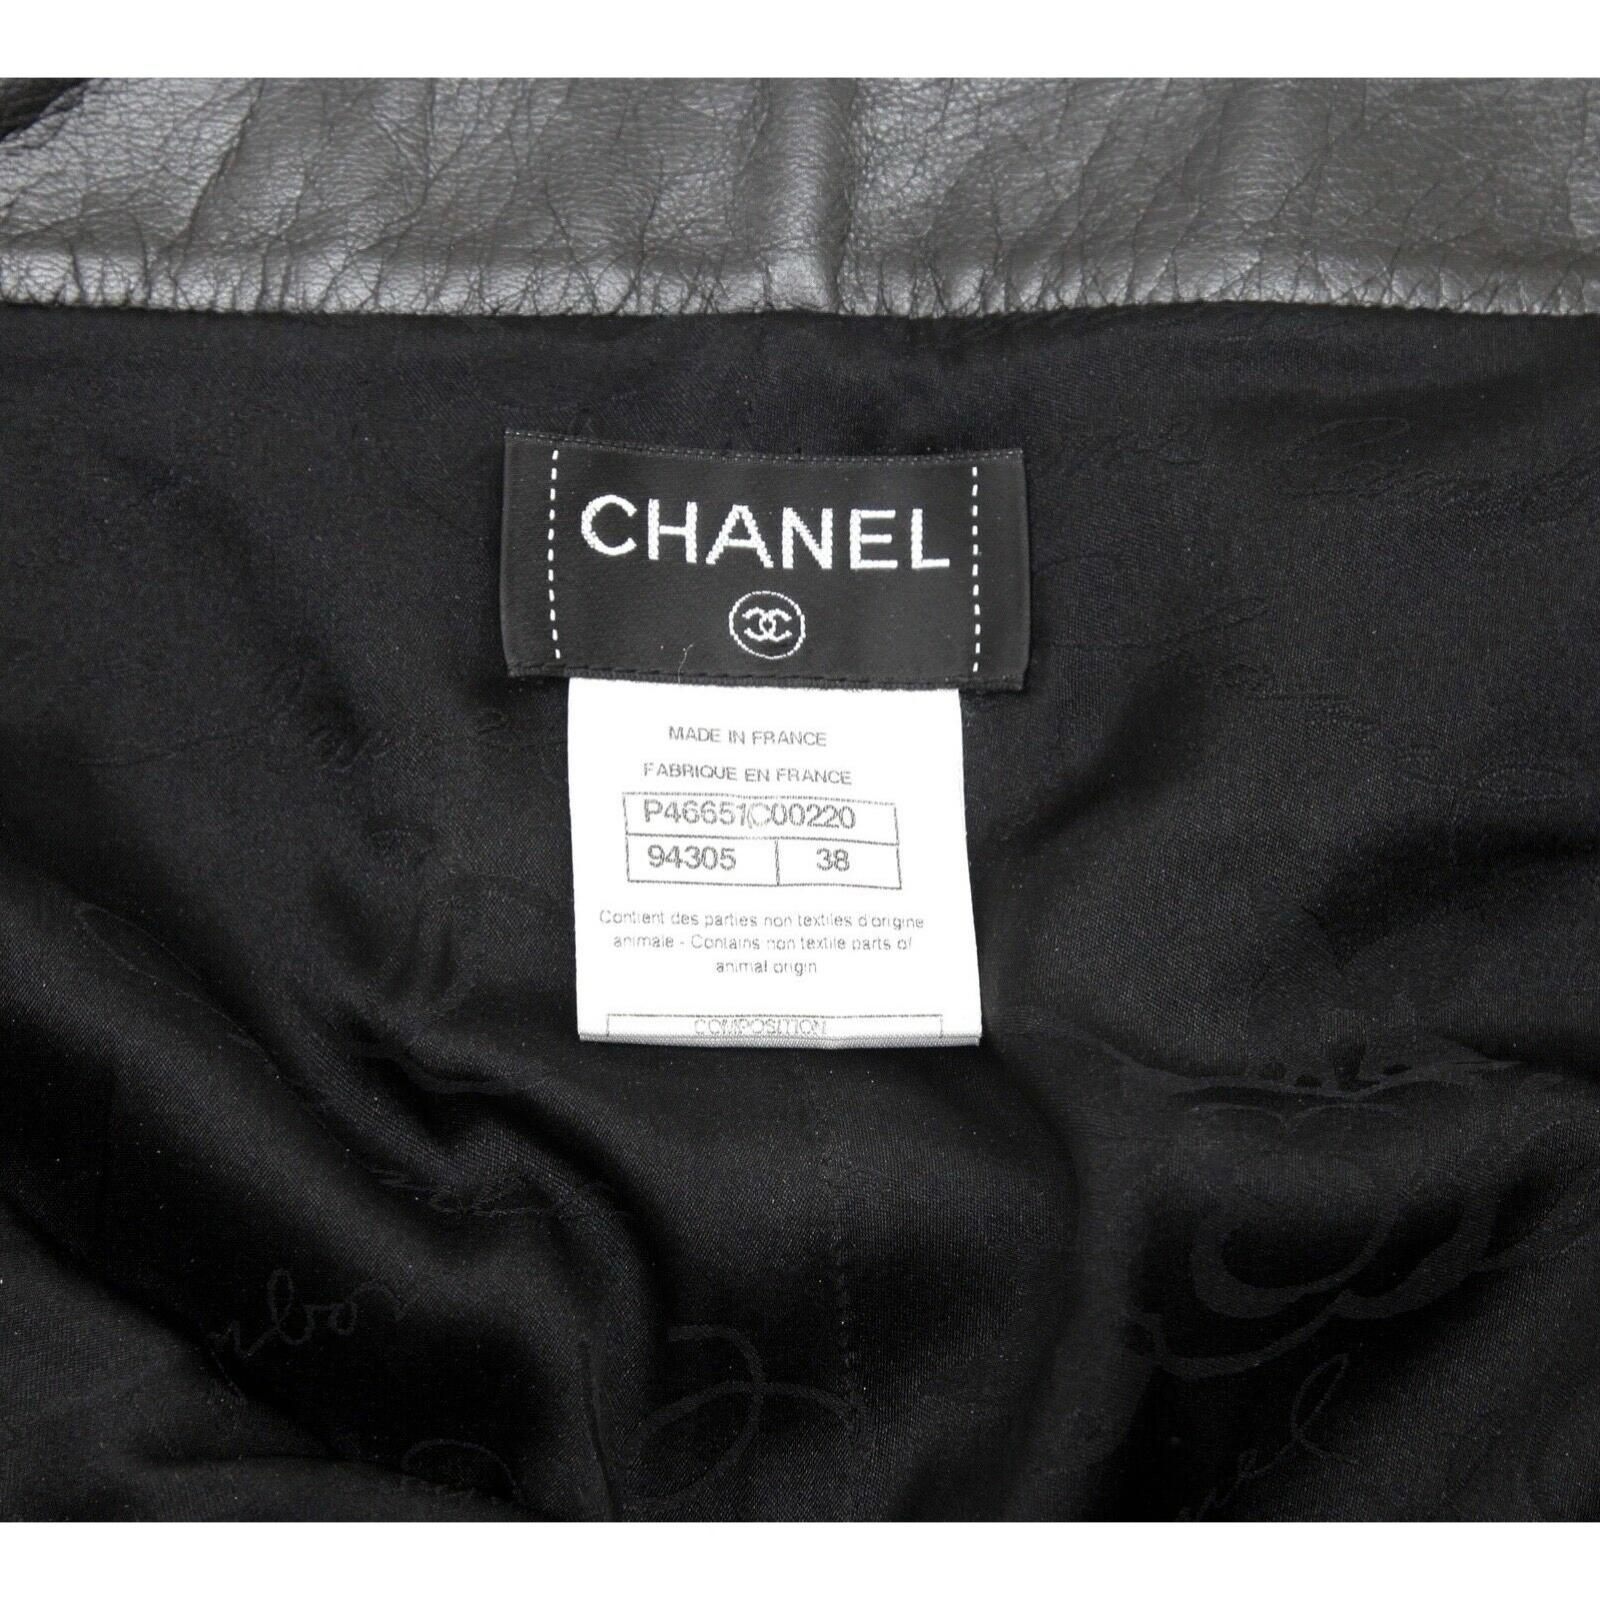 CHANEL Black Leather Pant Lambskin Straight Leg Pockets Side Zipper Sz 38 For Sale 3